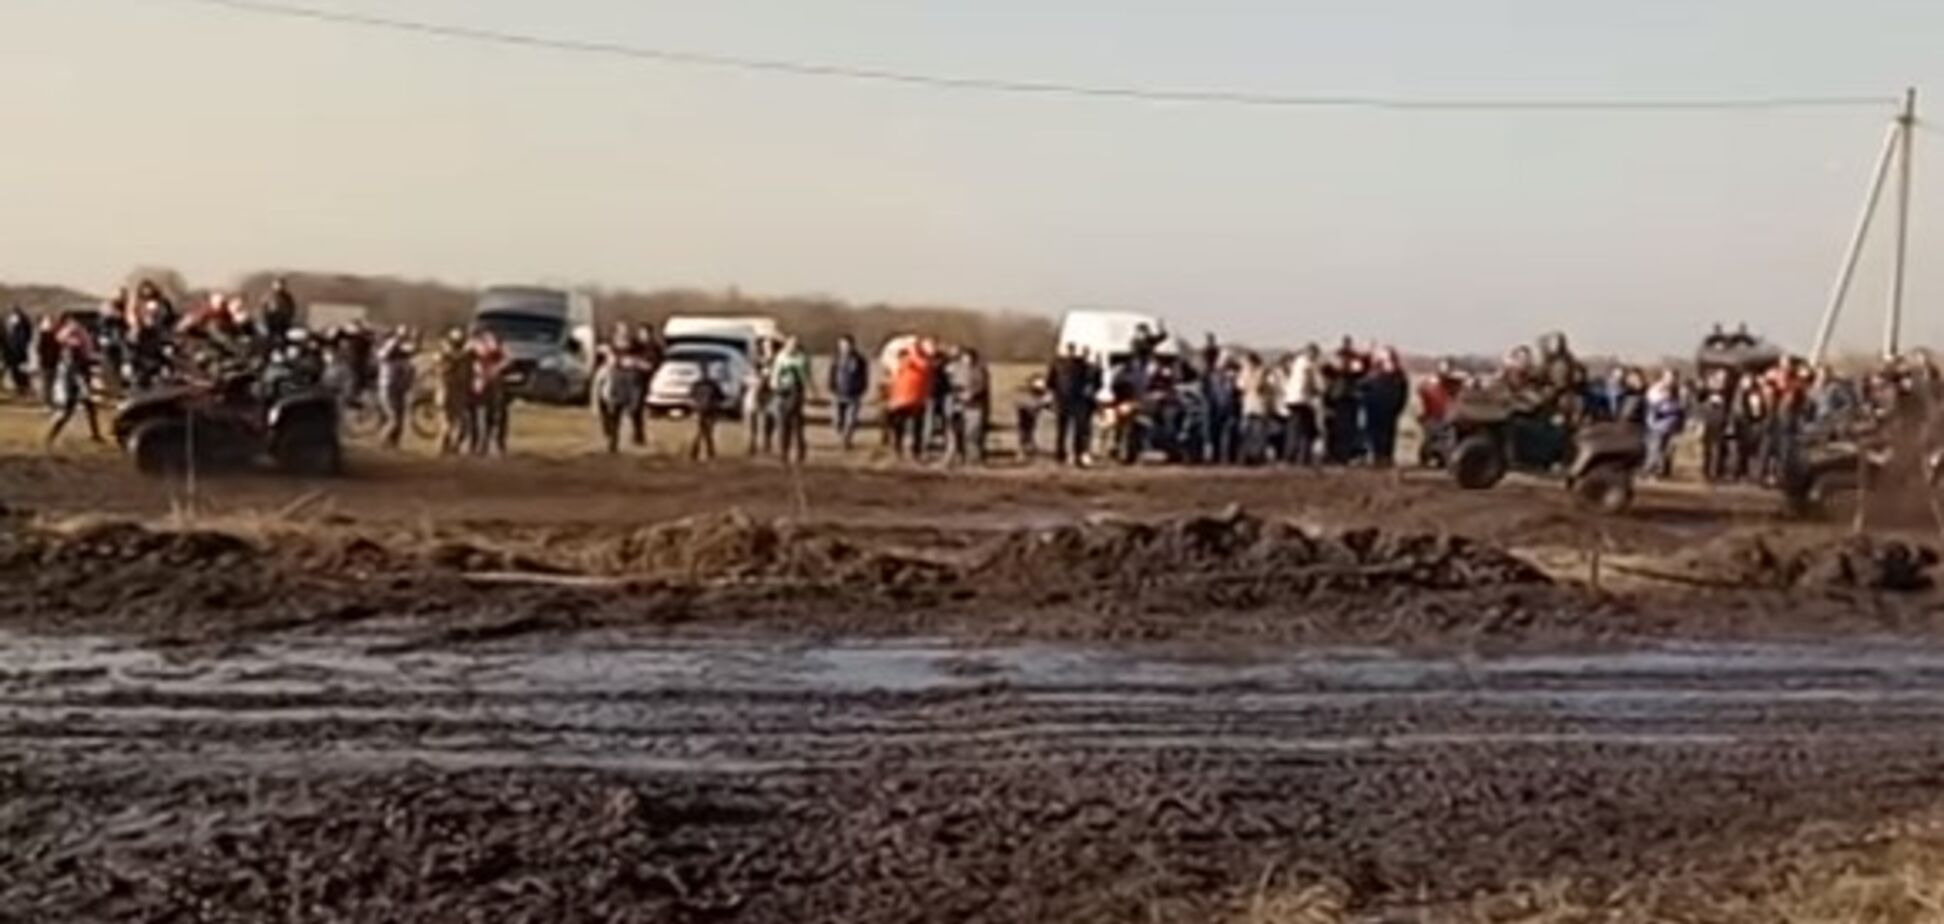 В России гонщик на квадроцикле влетел в толпу зрителей: видео инцидента